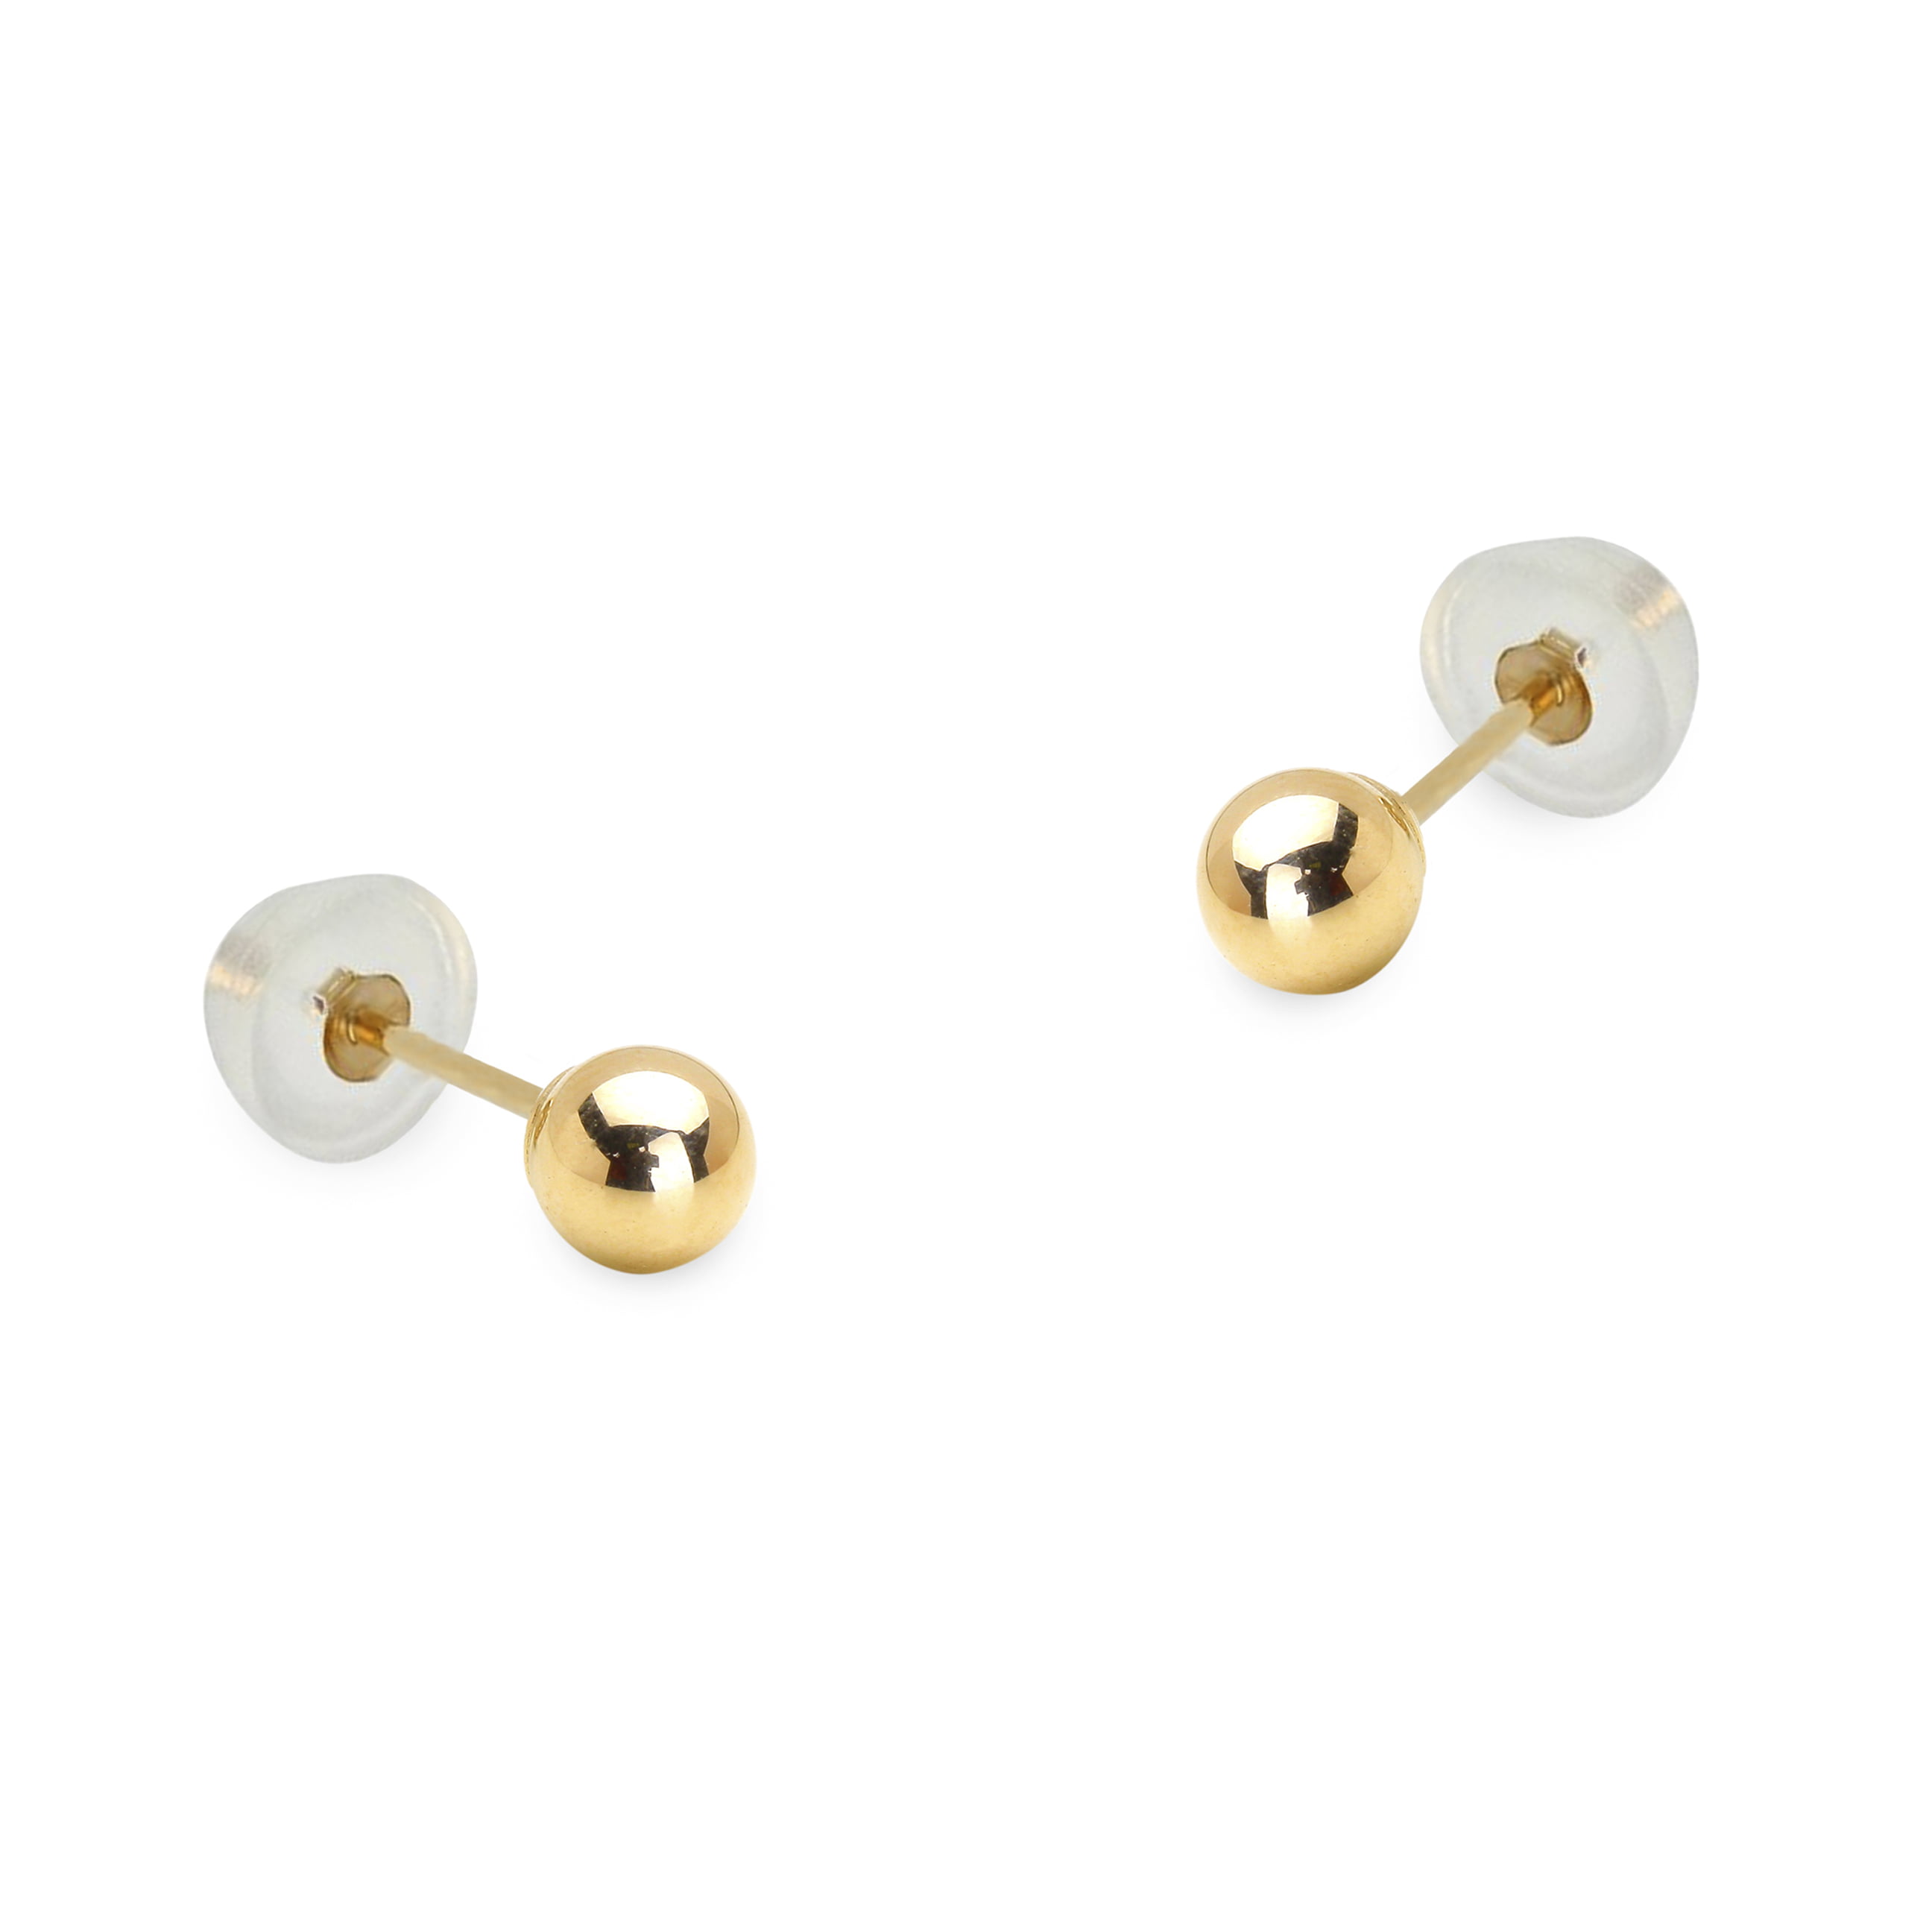 14K Yellow Gold Jewelry Ball Earrings Hollow 3 mm 3 mm Madi K Diamond Cut 3mm Half-Ball Post Earrings 